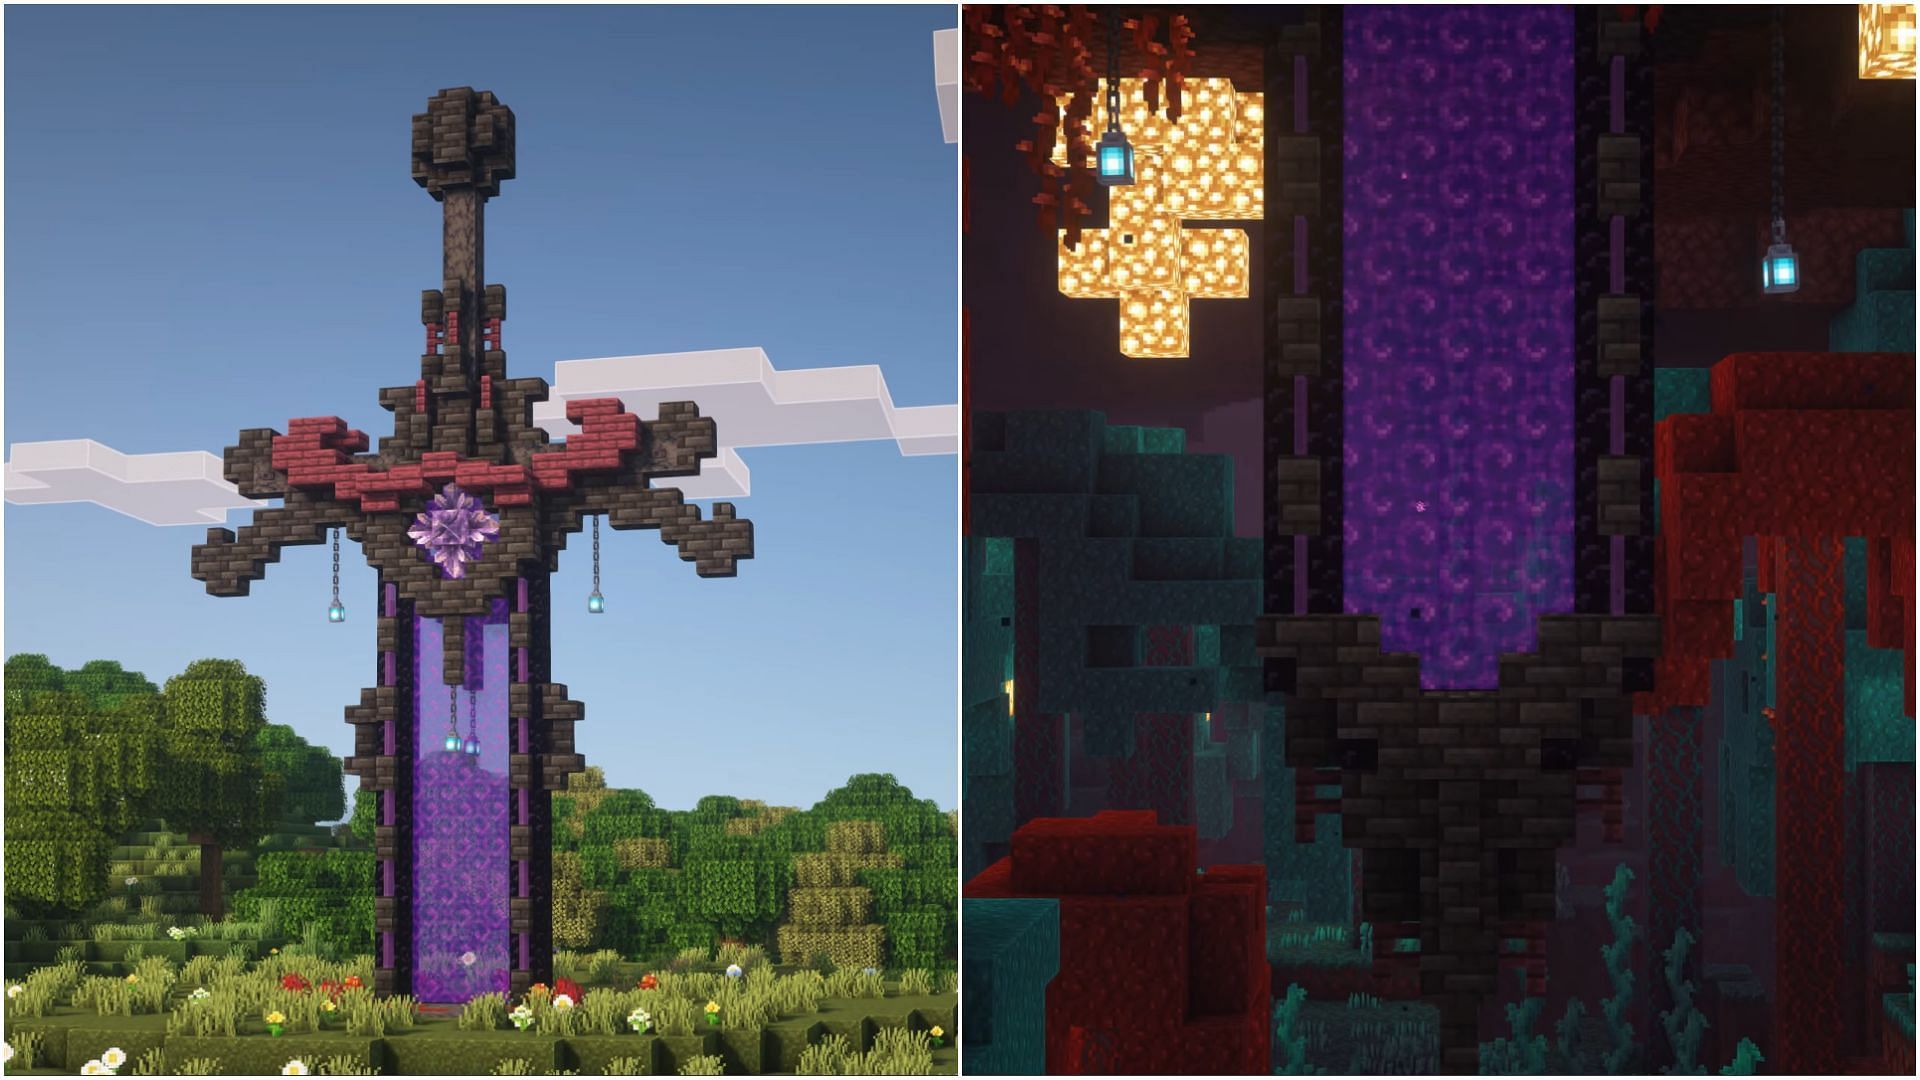 Nether Portal sword design is a unique concept to build in Minecraft (Image via Mojang)